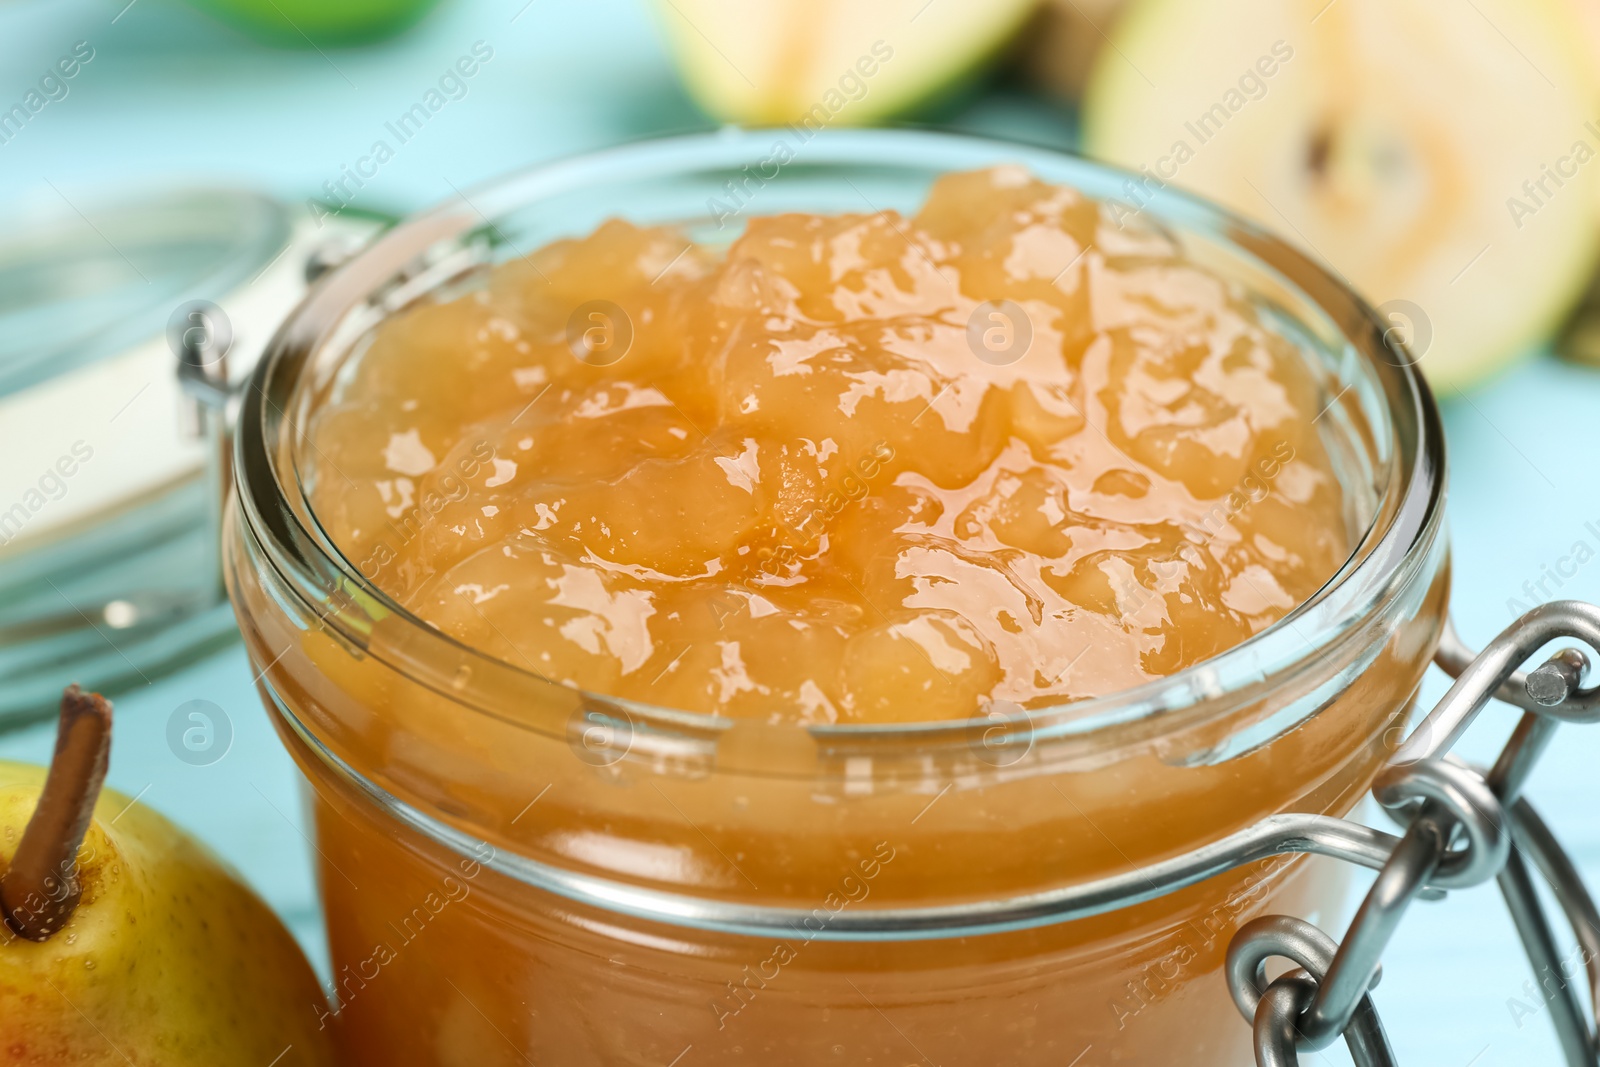 Photo of Closeup view of tasty homemade pear jam